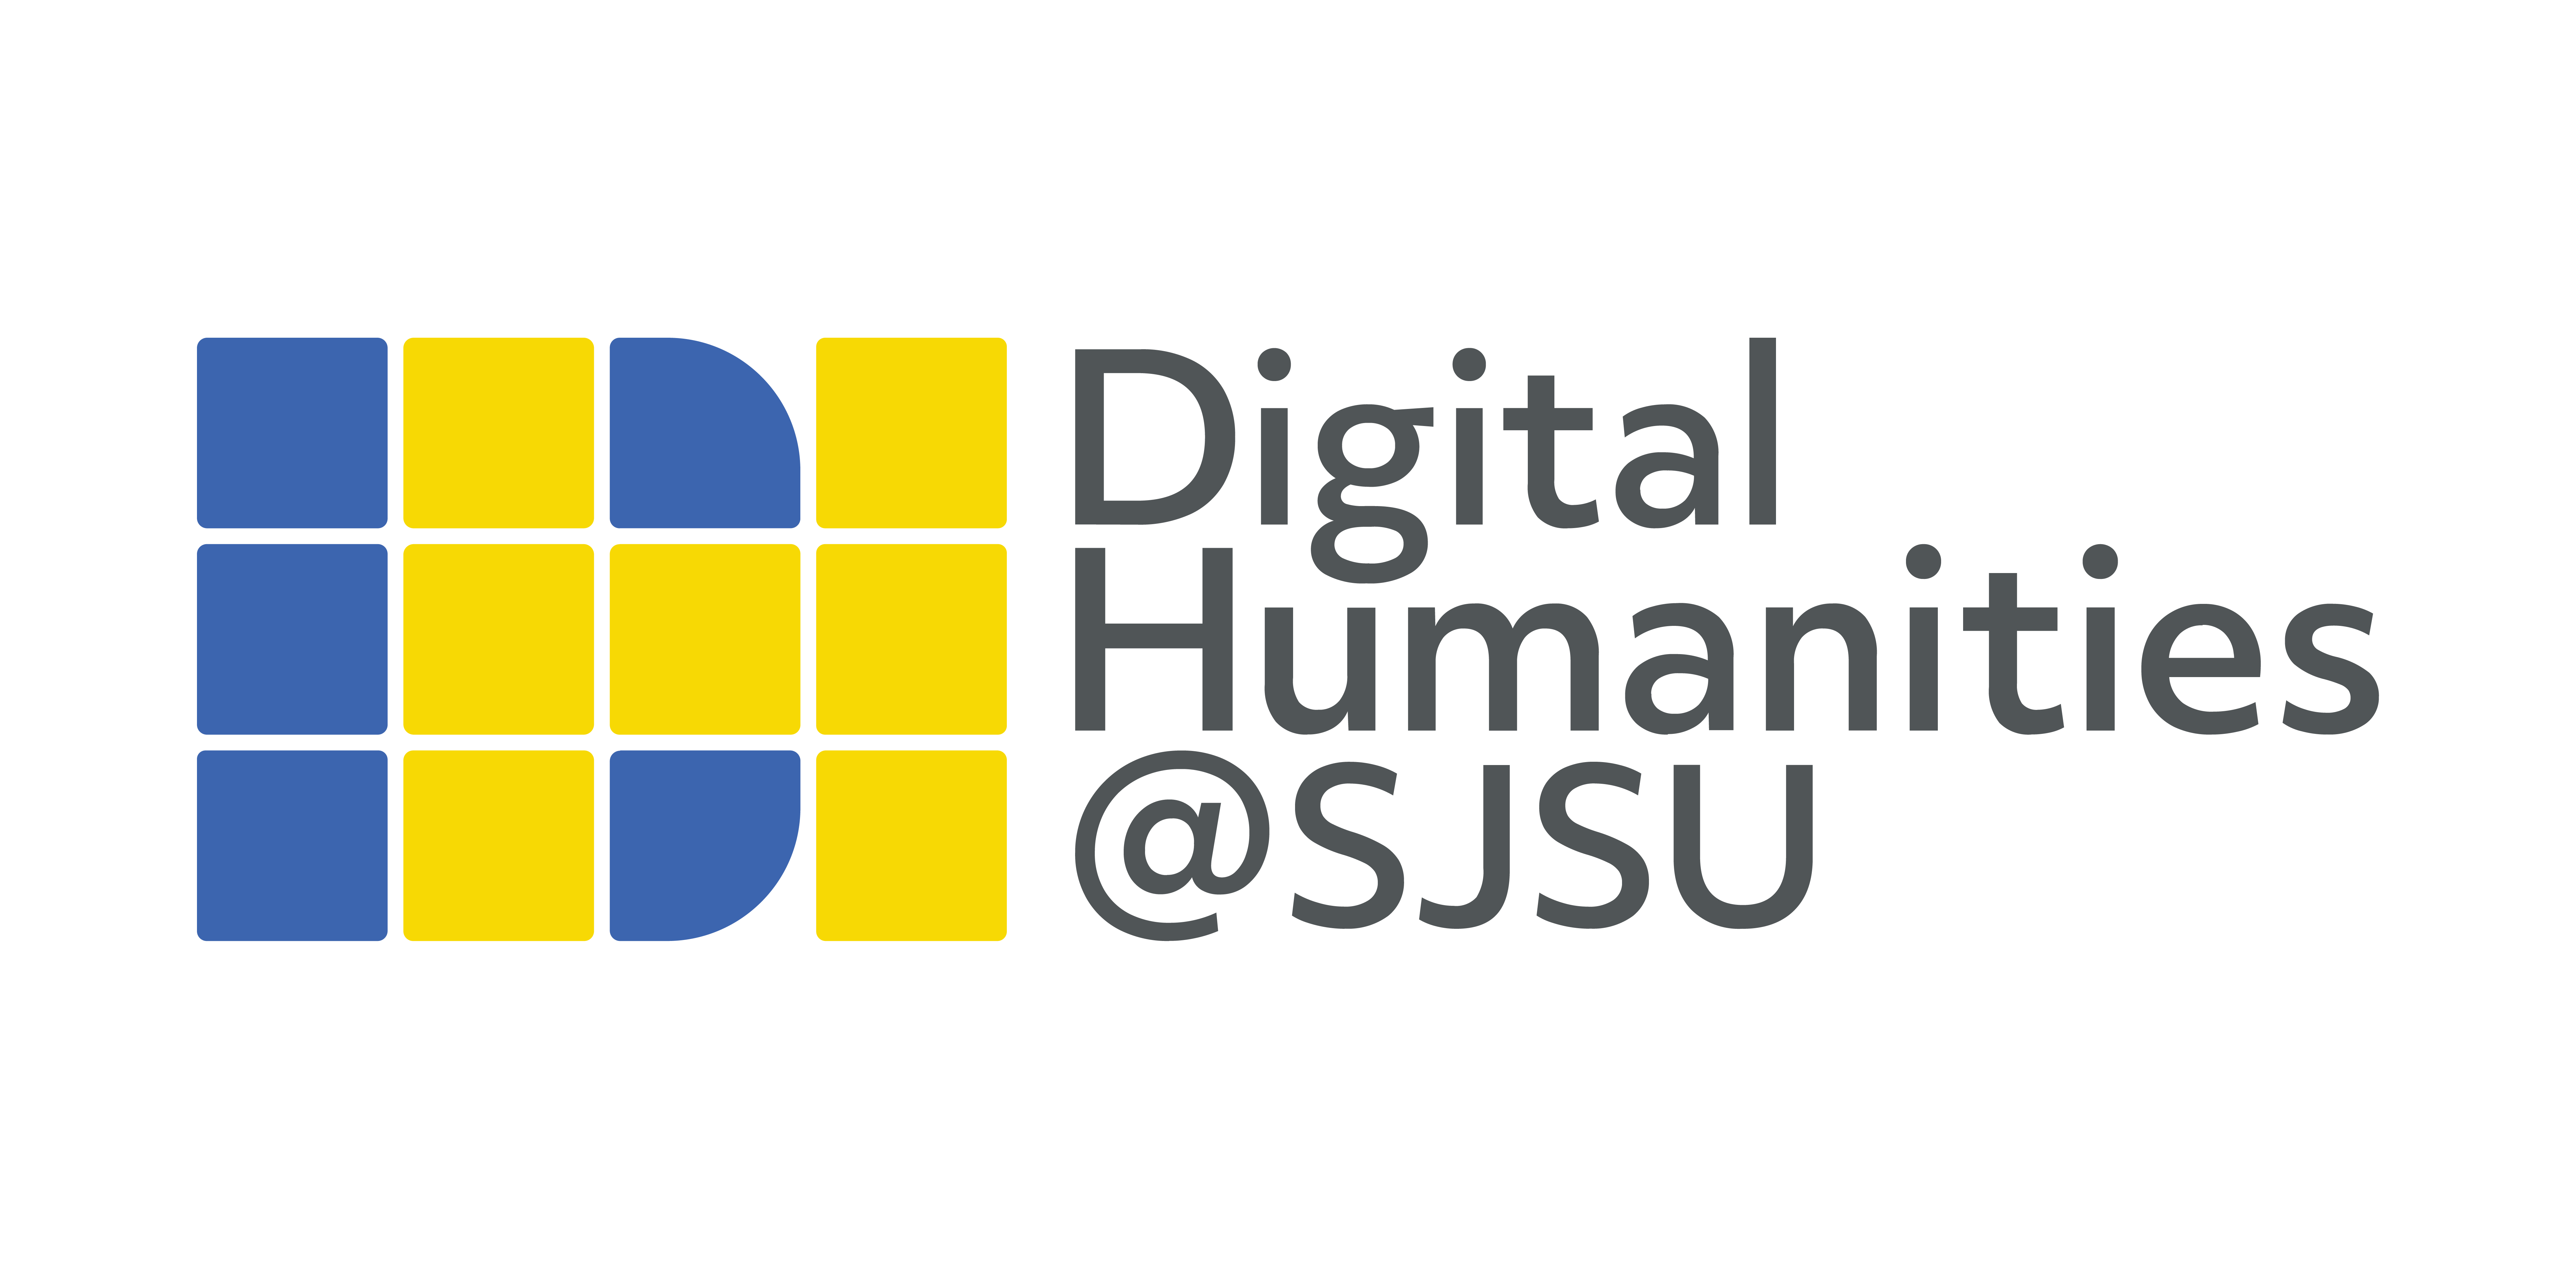 digital humanities at sjsu in gold and blue blocks